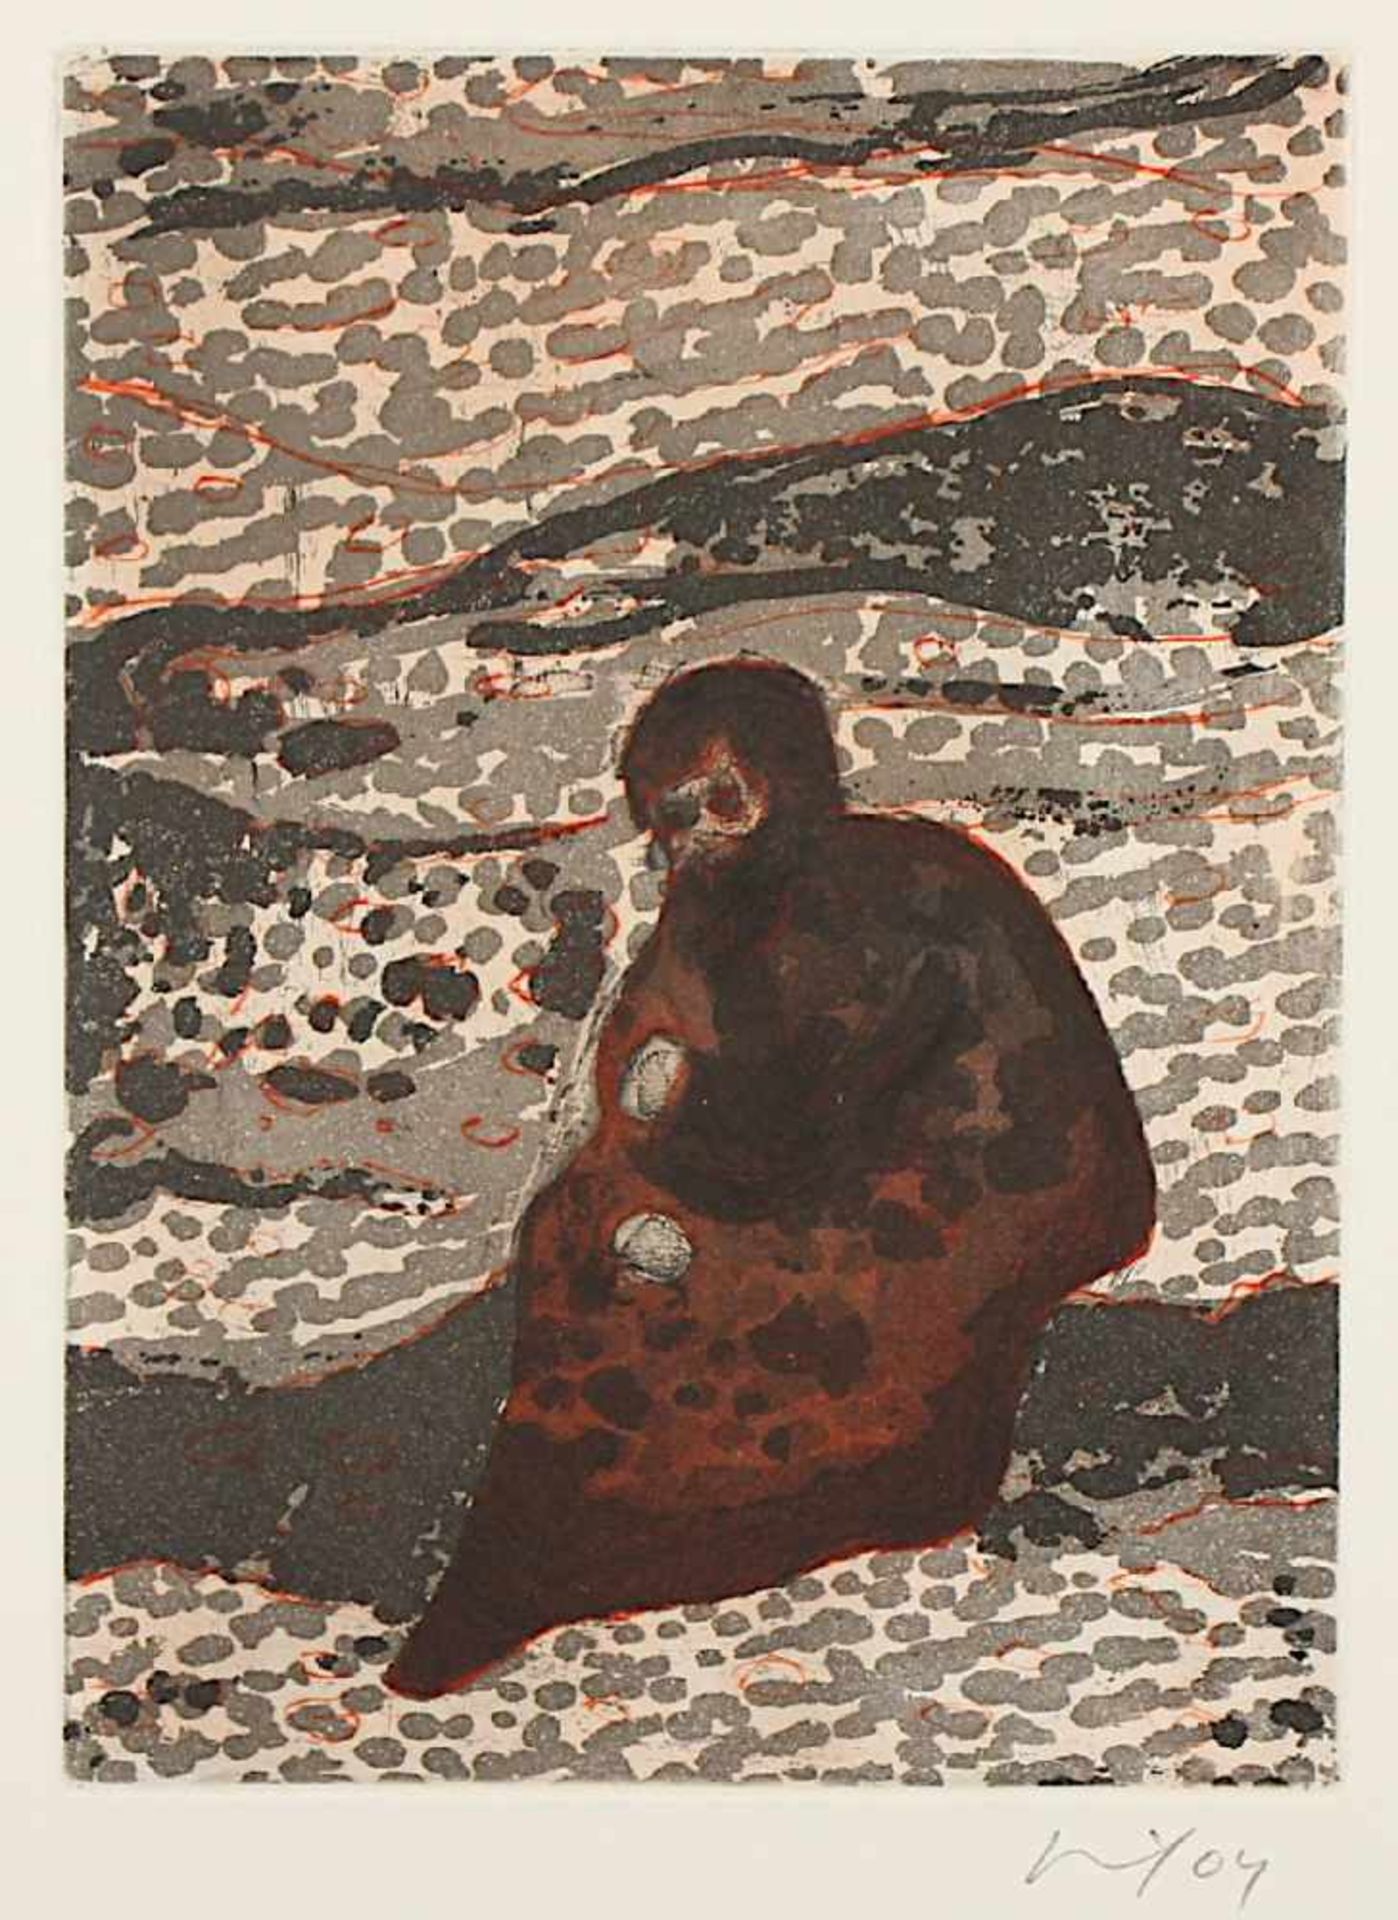 DOIG, Peter, "Figure by a river", Blatt aus der Serie: Black Palms. Farbige Aquatinta-Radierung